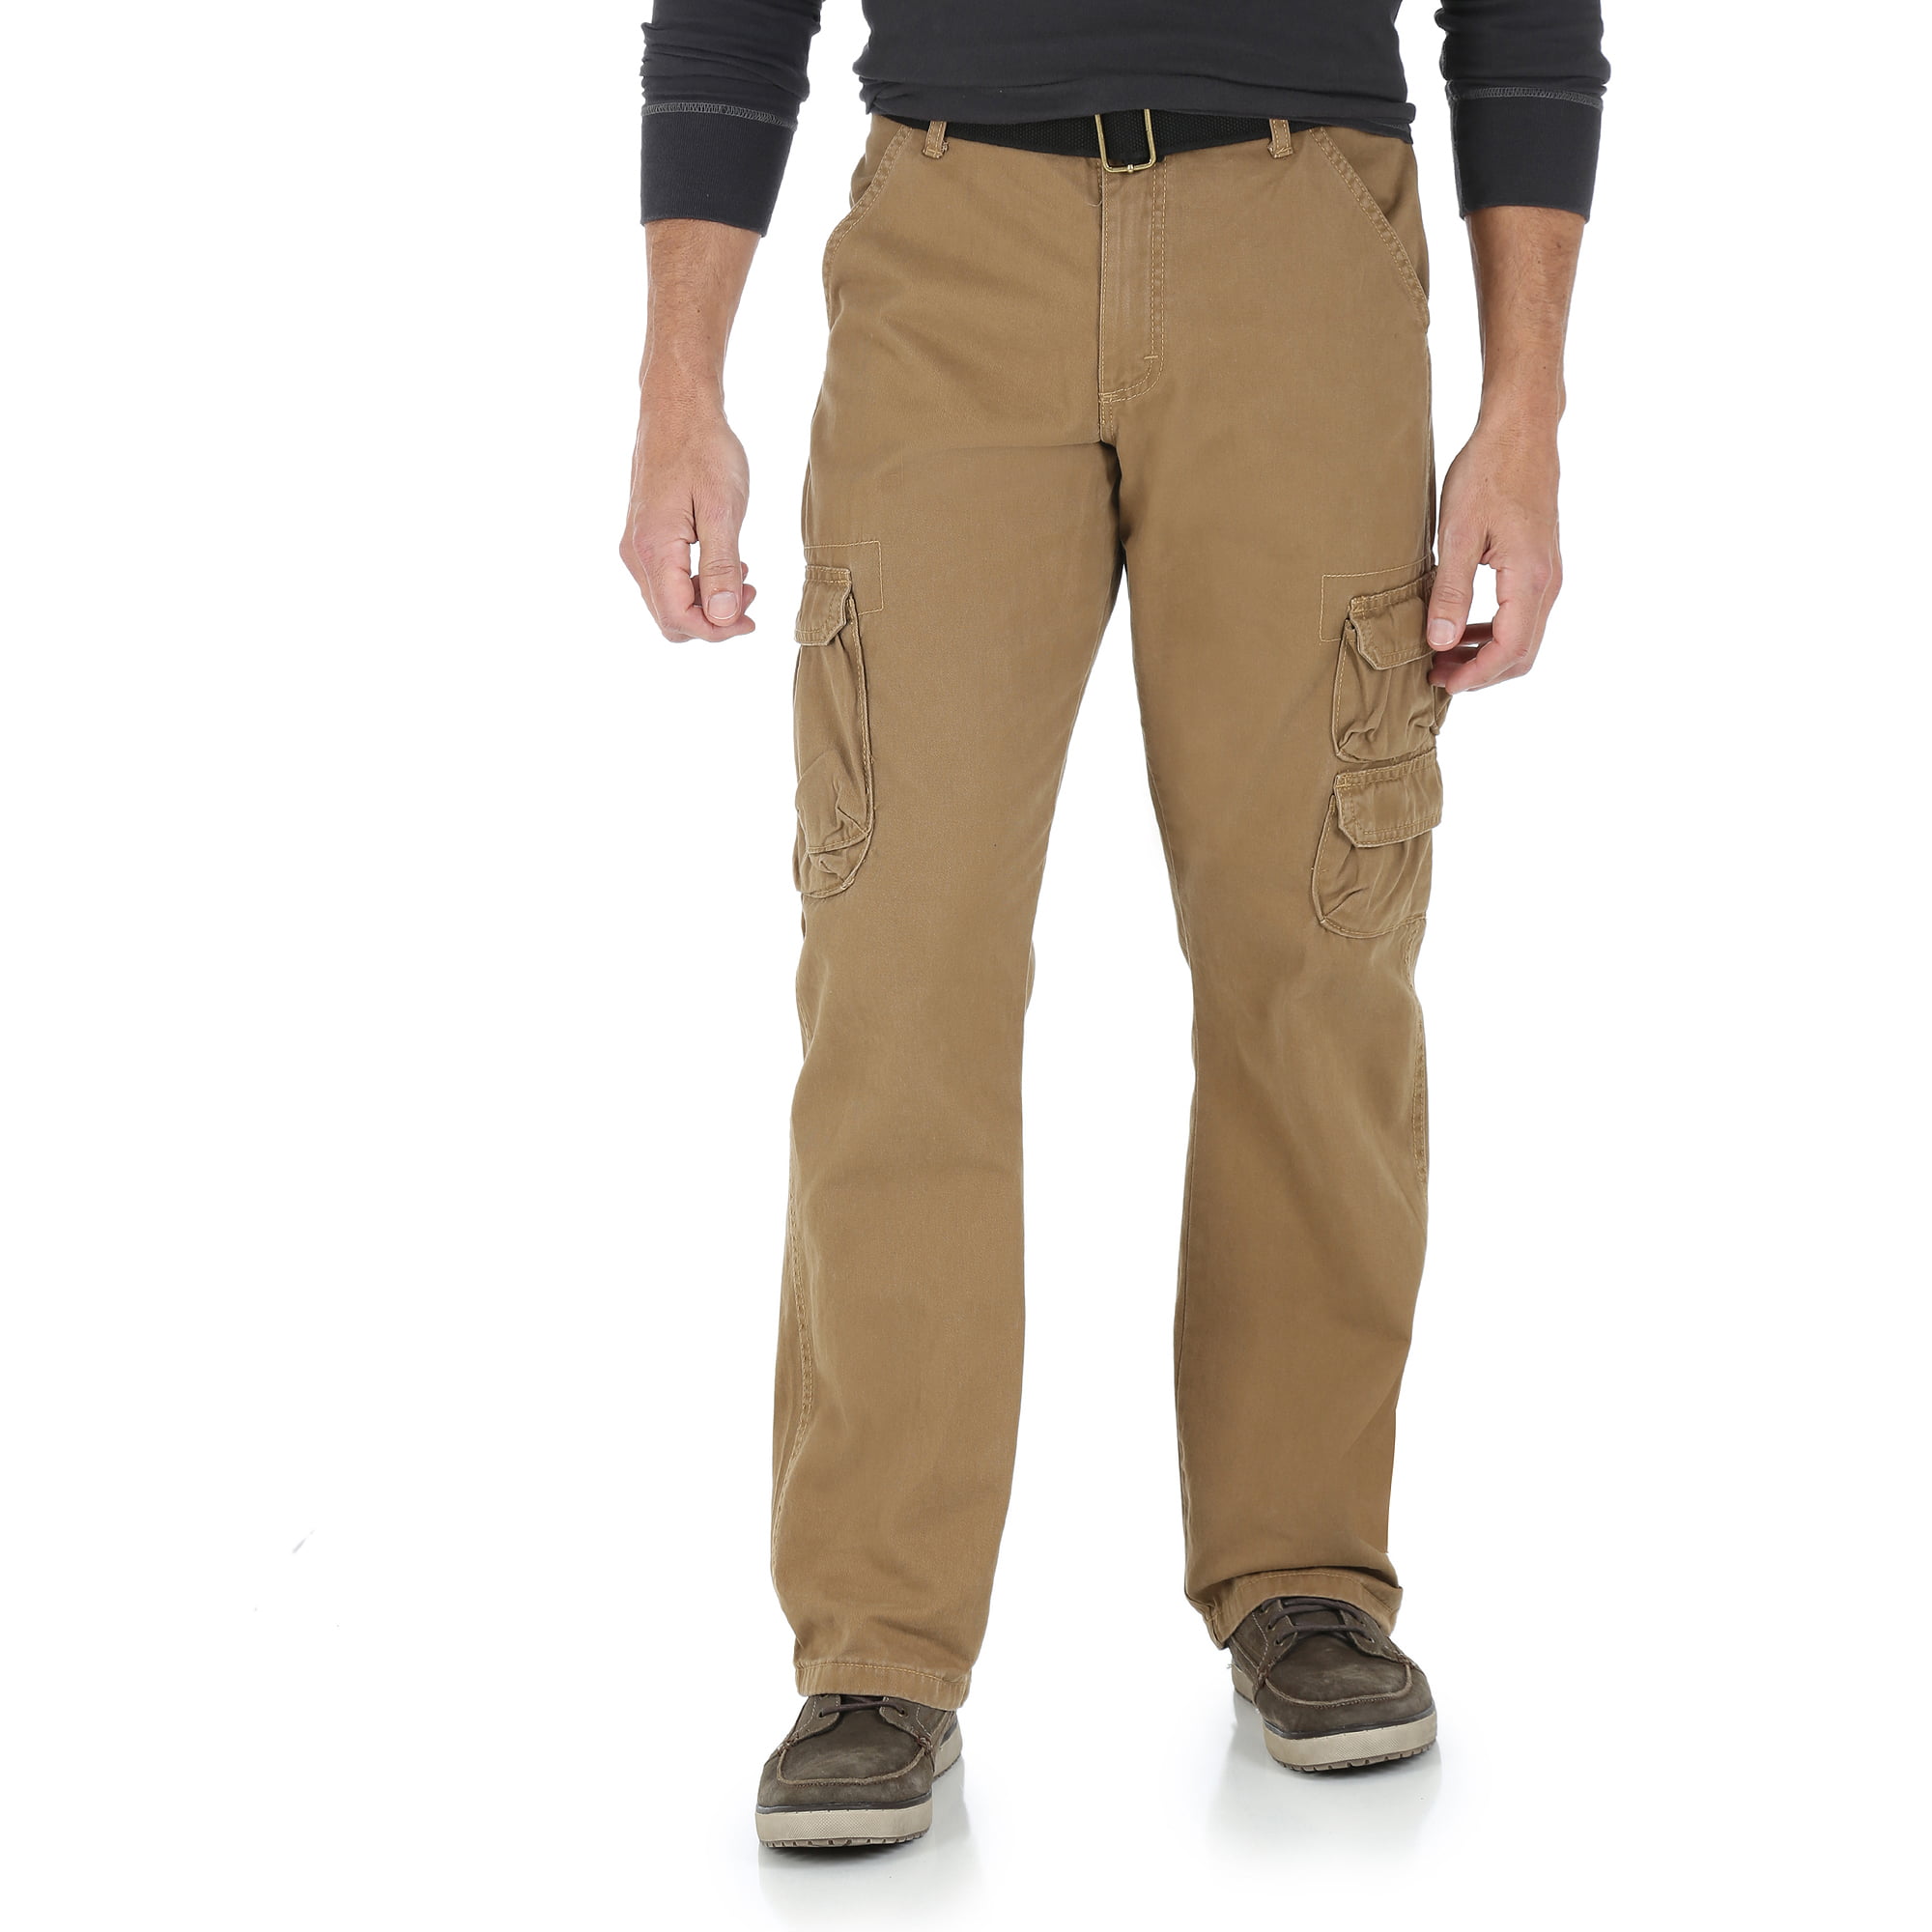 Wrangler Jeans Co. Men's Twill Cargo Pant - Walmart.com